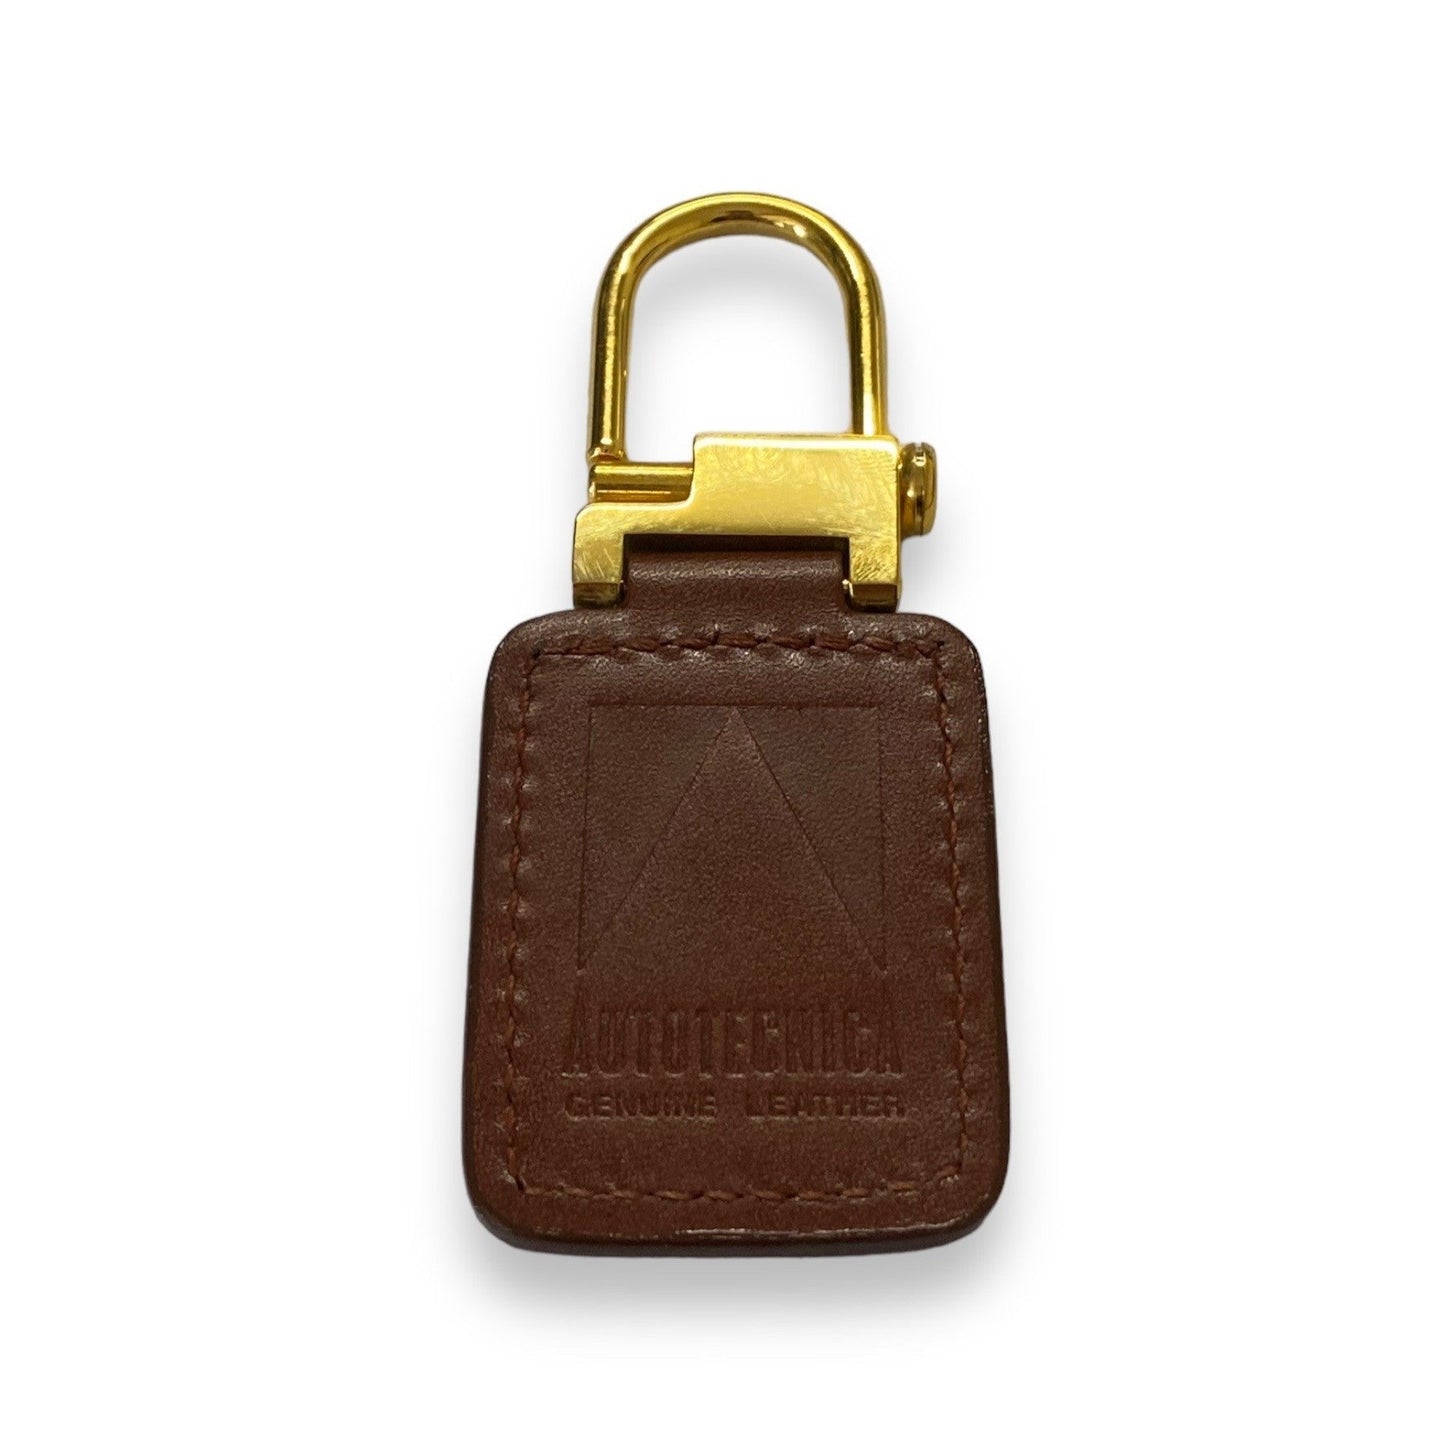 Jaguar brown leather key chain